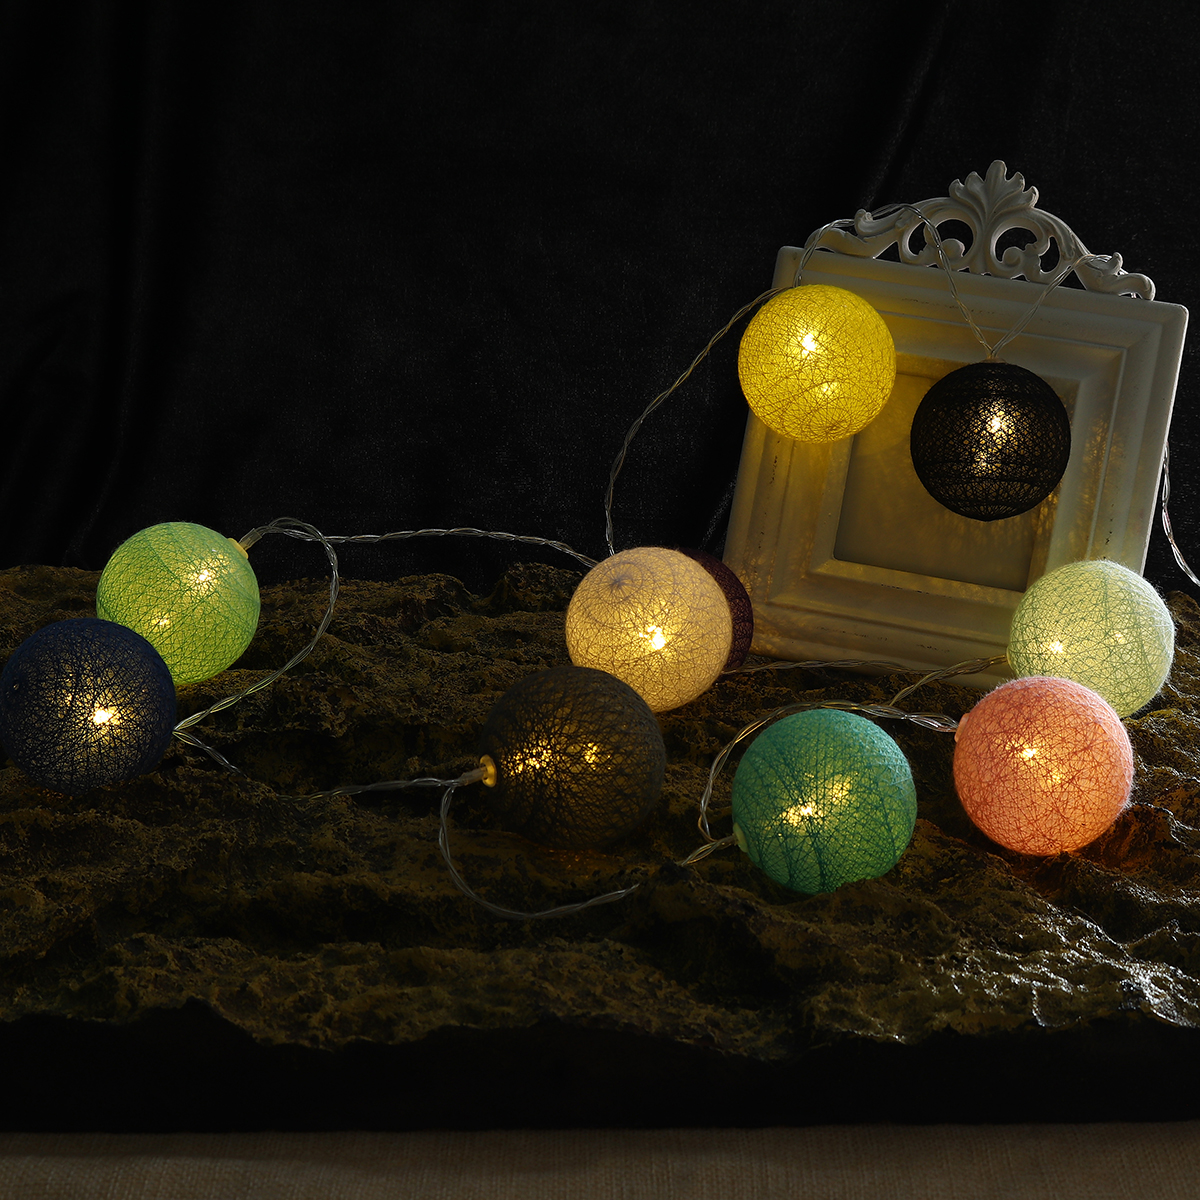 15m-10-Balls-LED-String-Lights-Ball-Bulb-Fairy-Outdoor-Garden-Party-Lamp-Colorful-Christmas-Decor-1758662-6